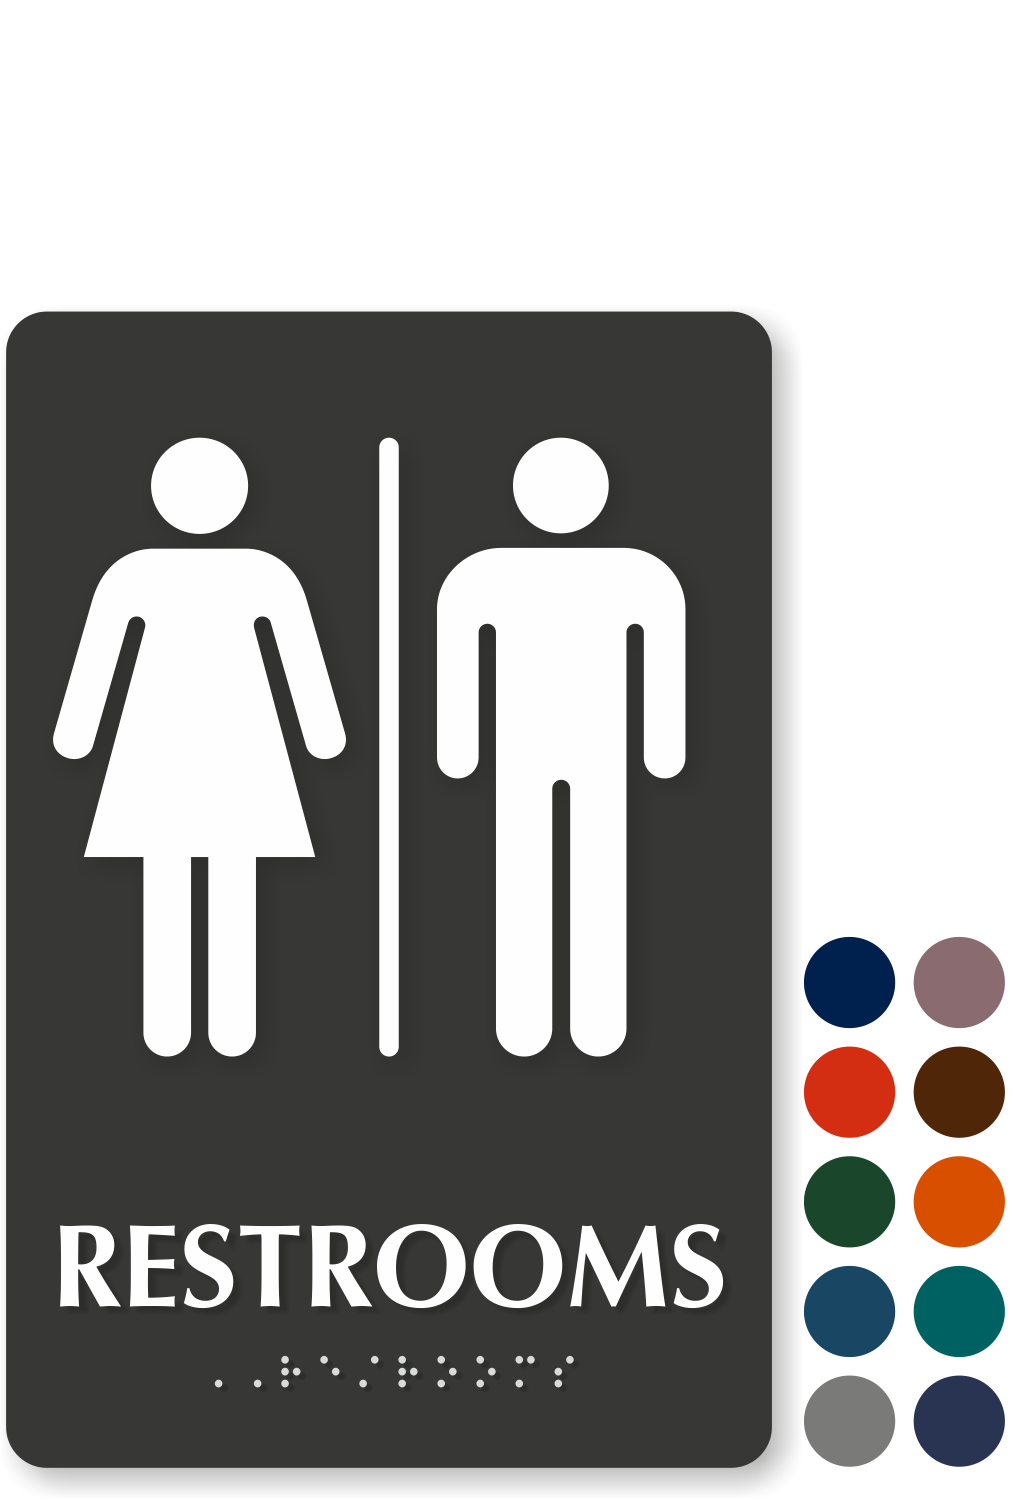 Unisex Restroom Sign Free Printable